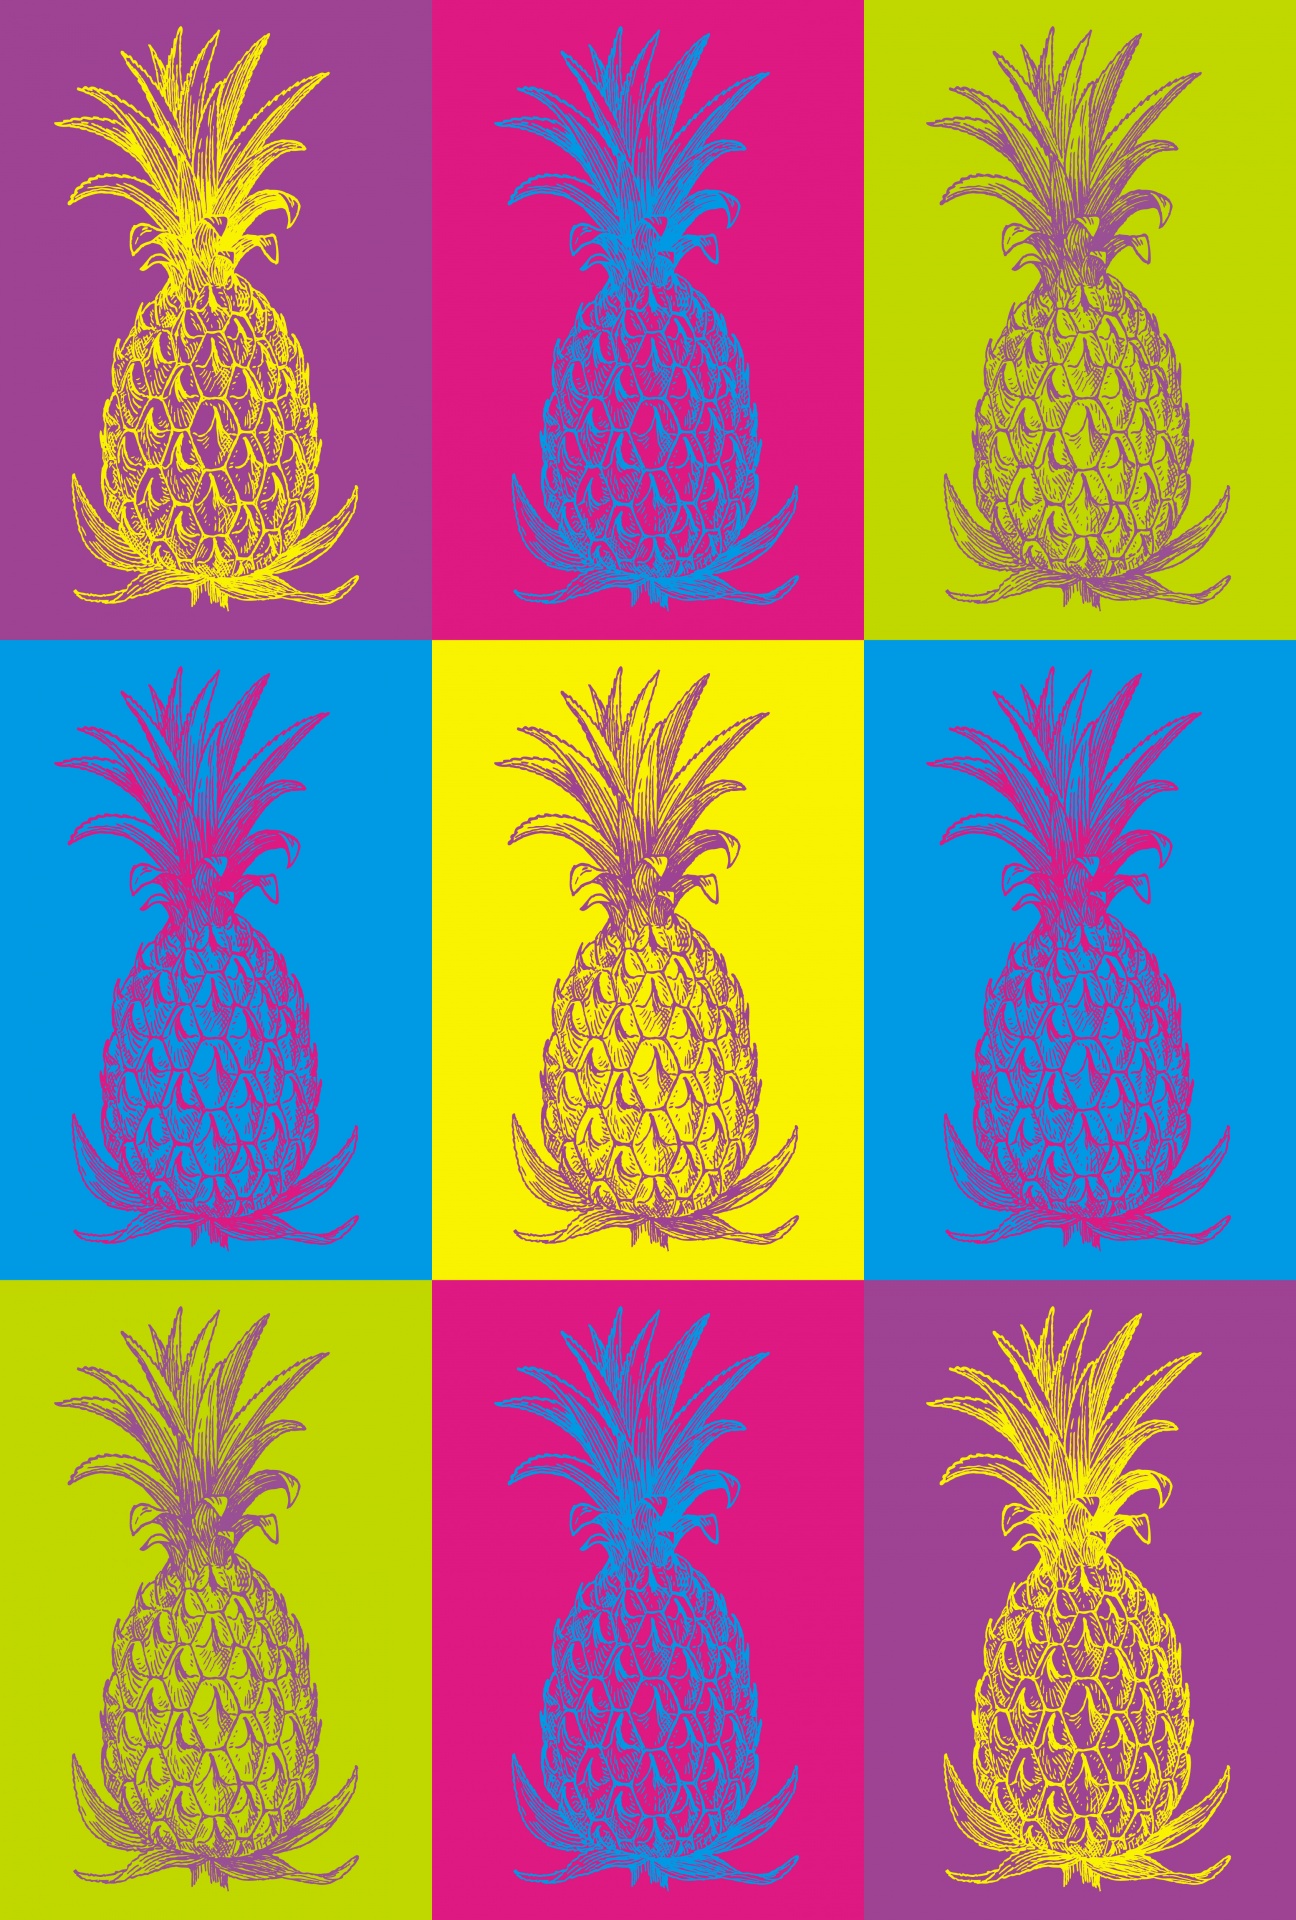 Pineapple Pop Art Poster